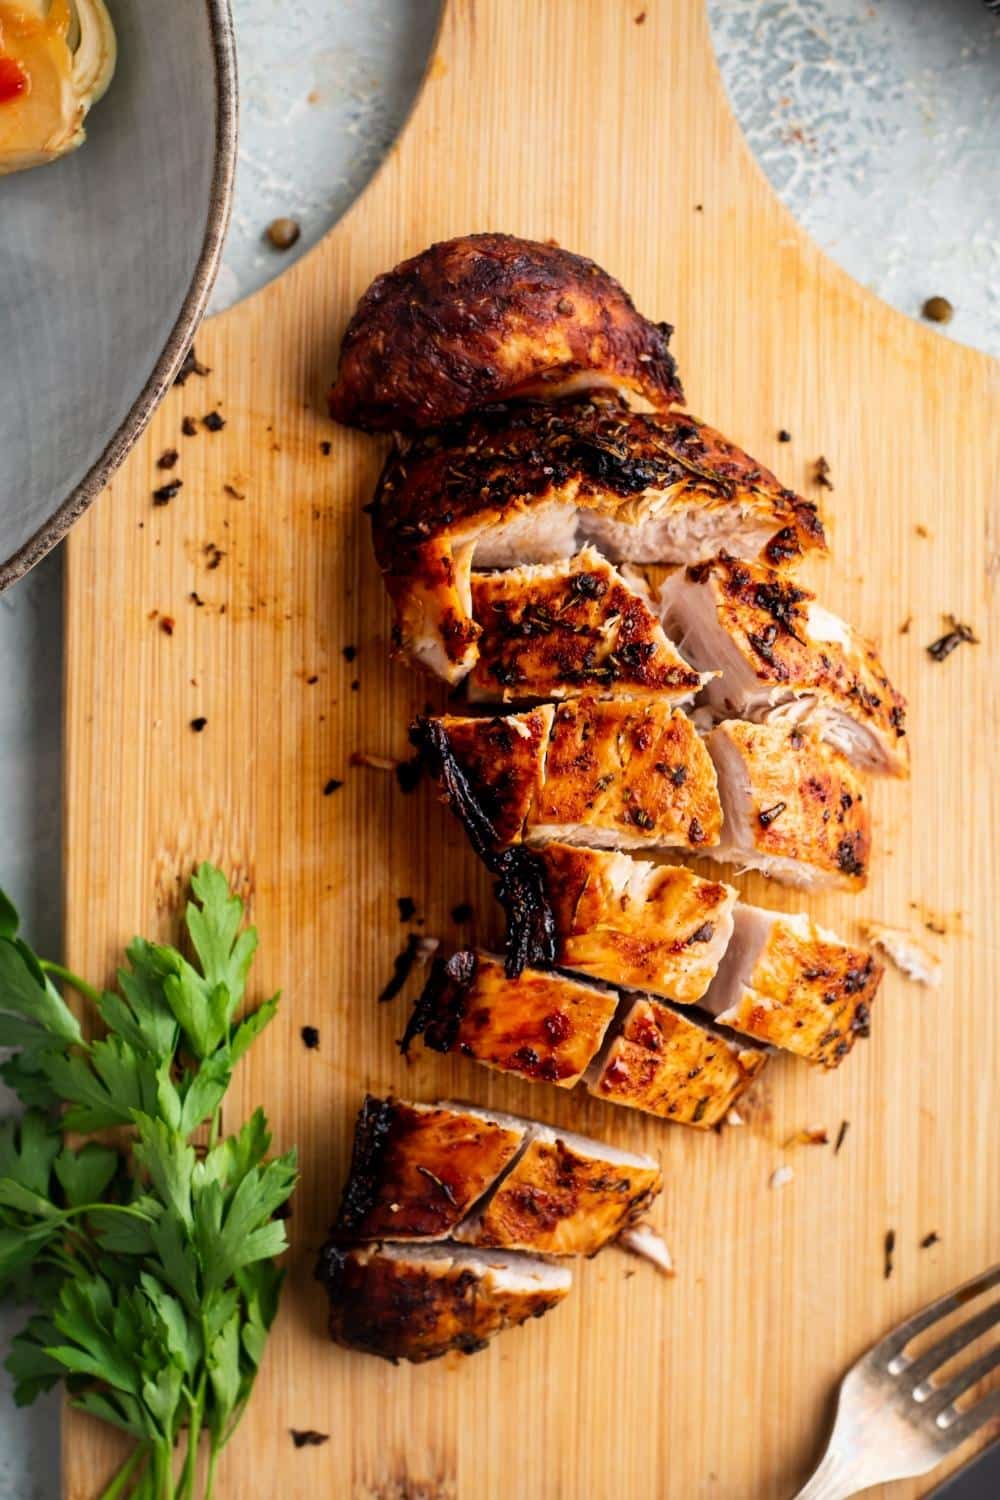 Turkey tenderloin sliced into pieces on a wooden cutting board.